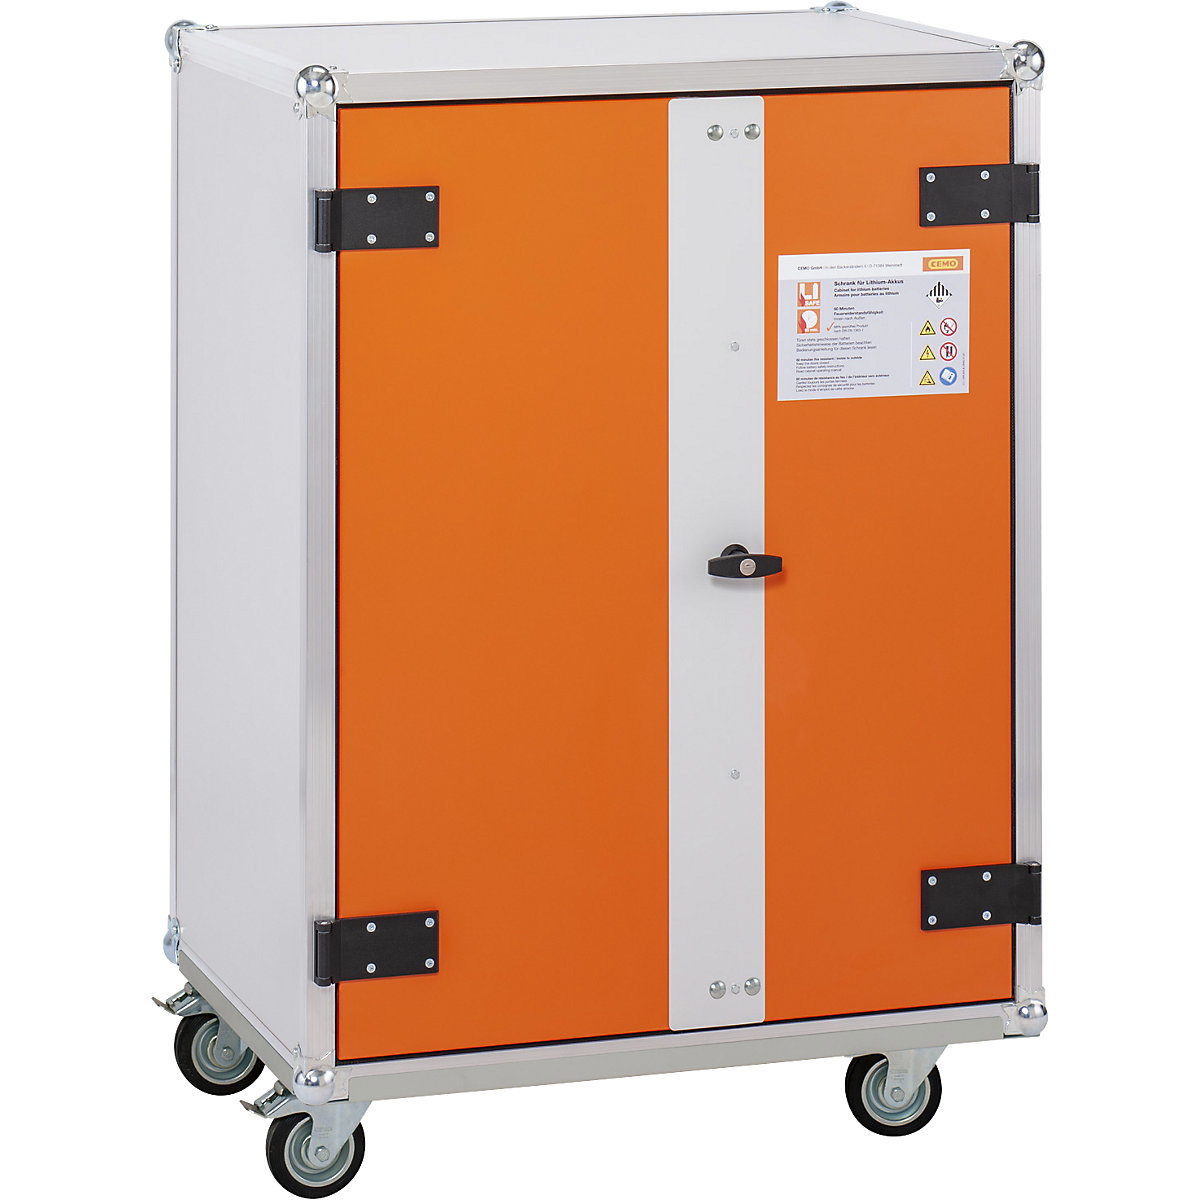 PREMIUM PLUS safety battery charging cabinet – CEMO, DxH 660 x 1150 mm, 230 V, orange/grey-1